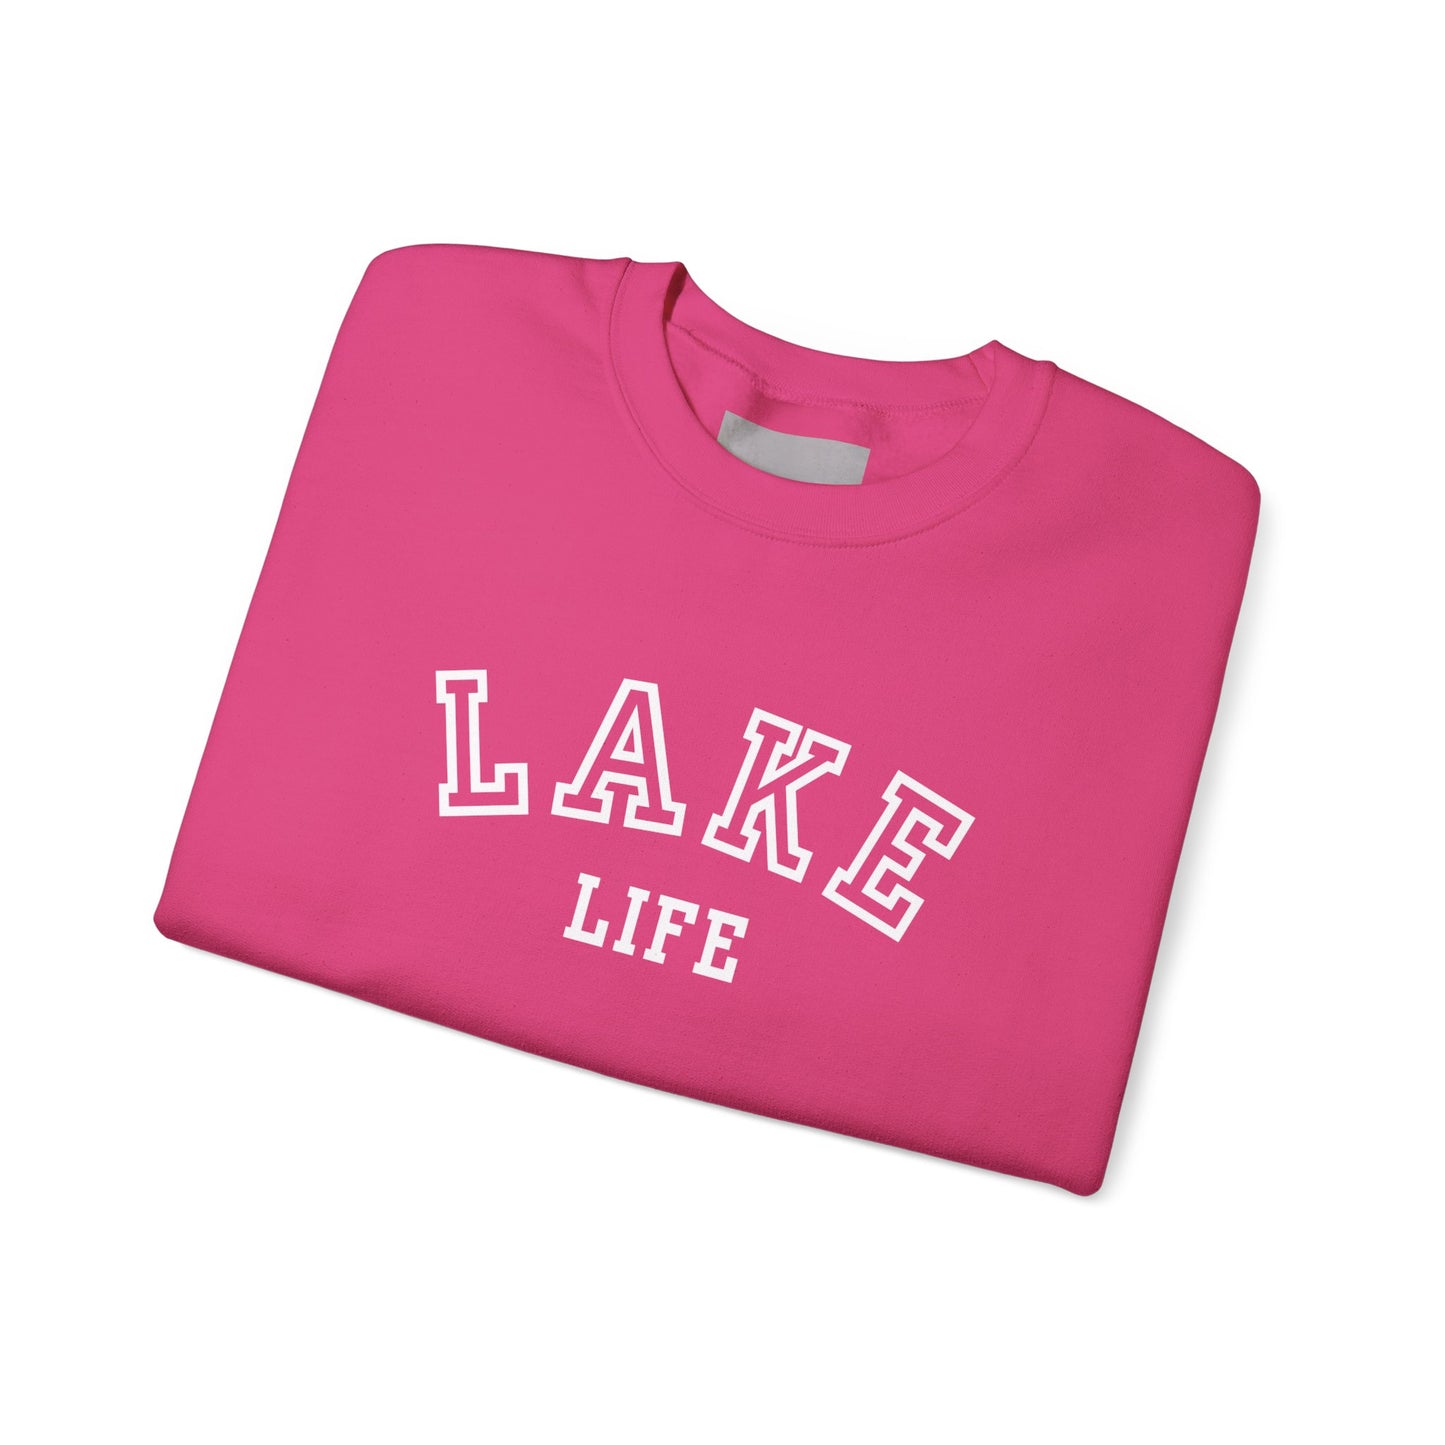 Lake Life | Vintage style crewneck | Sweatshirt